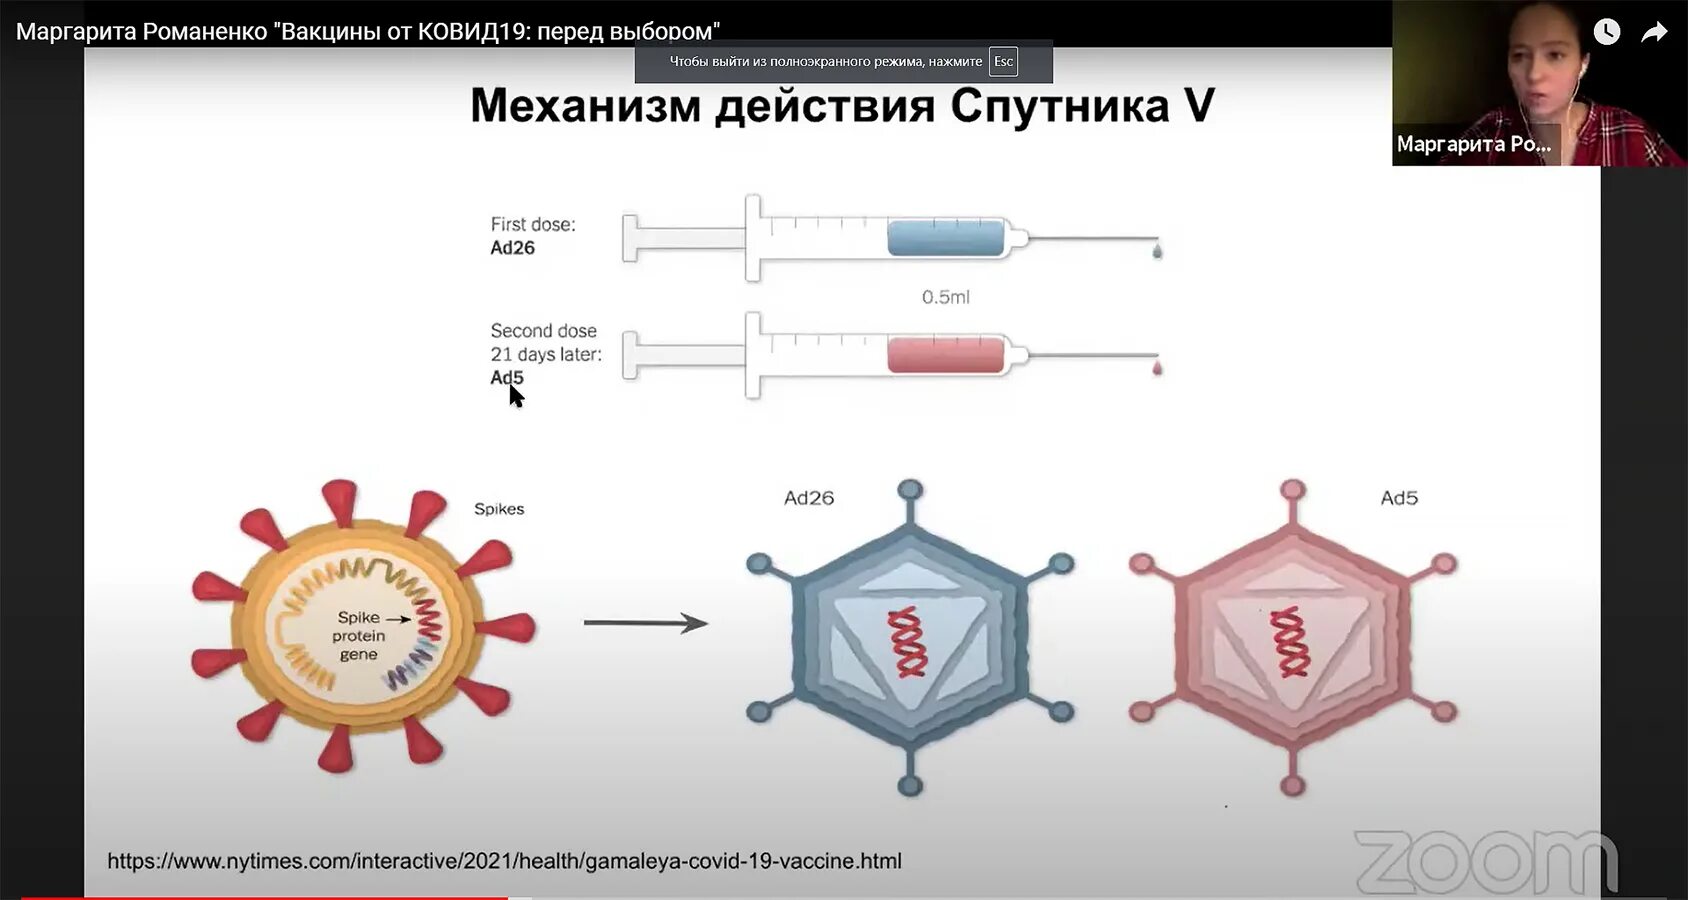 Схема действия вакцины. Вакцинация механизм действия. Вакцина от коронавируса структура.